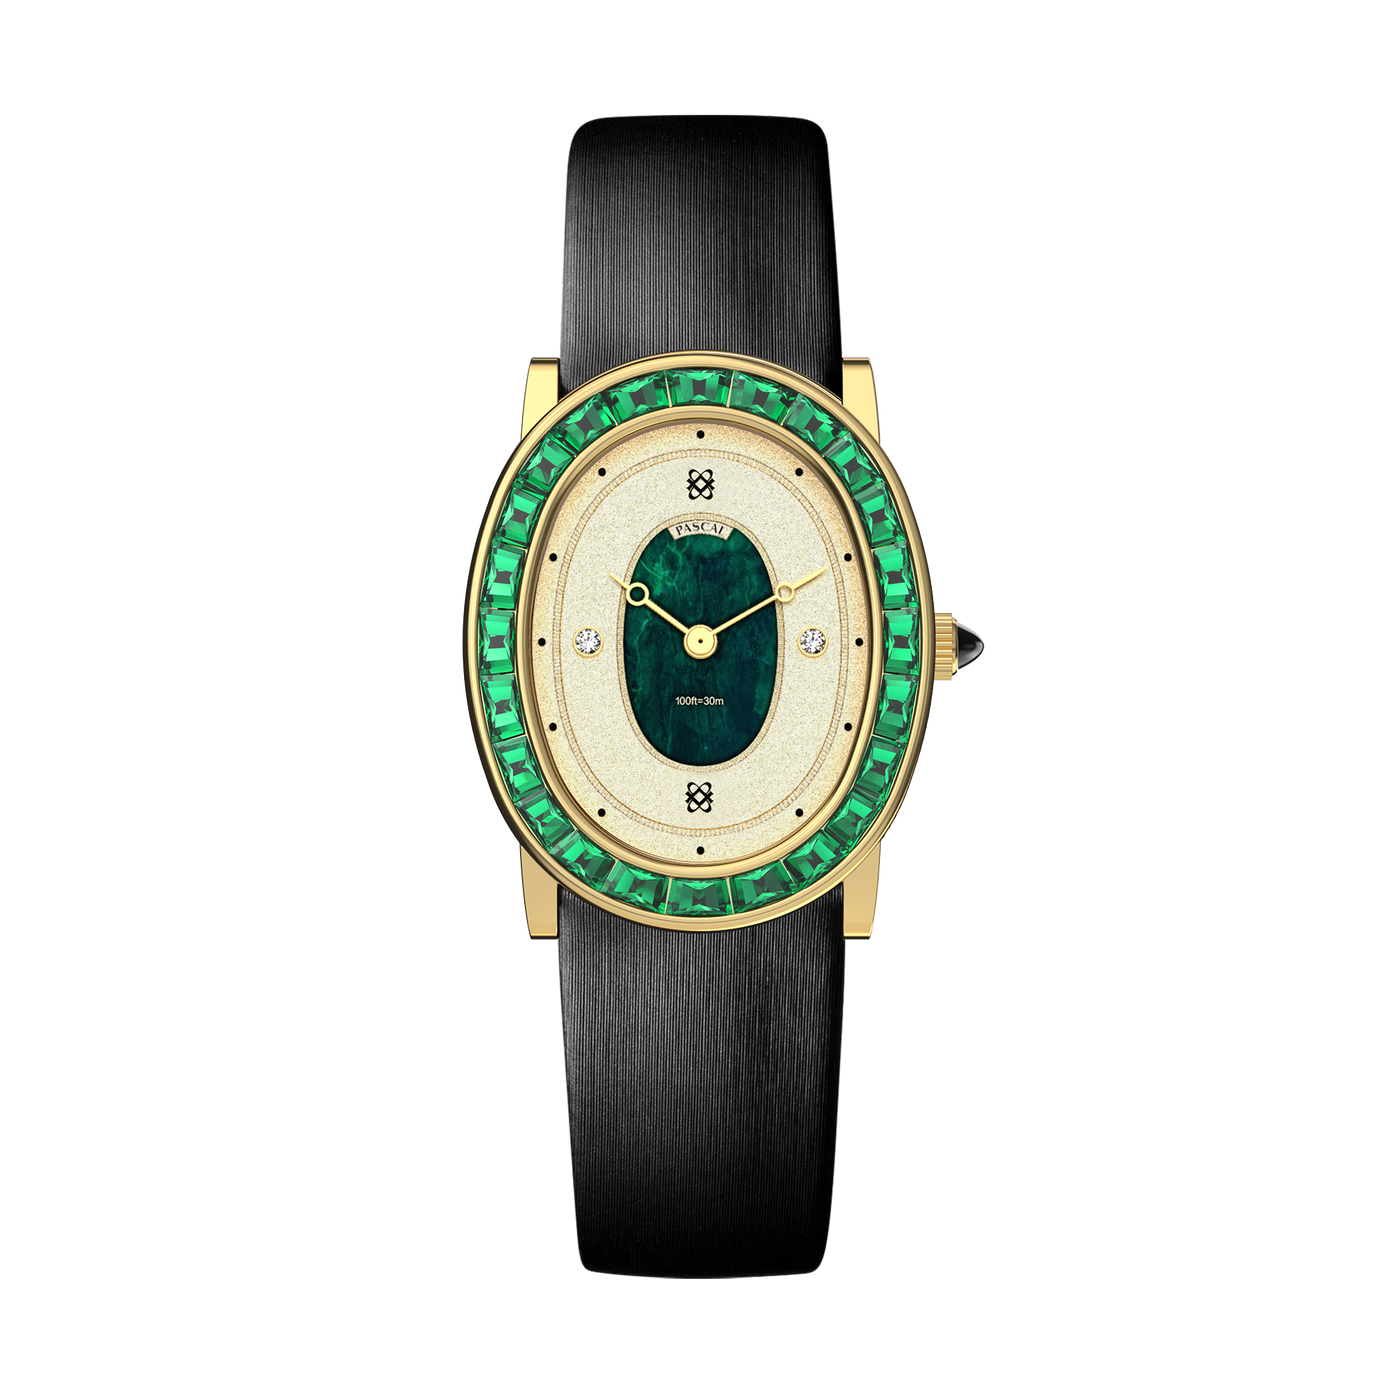 Oval Halo Diamond Watch and Cufflinks Gift Set